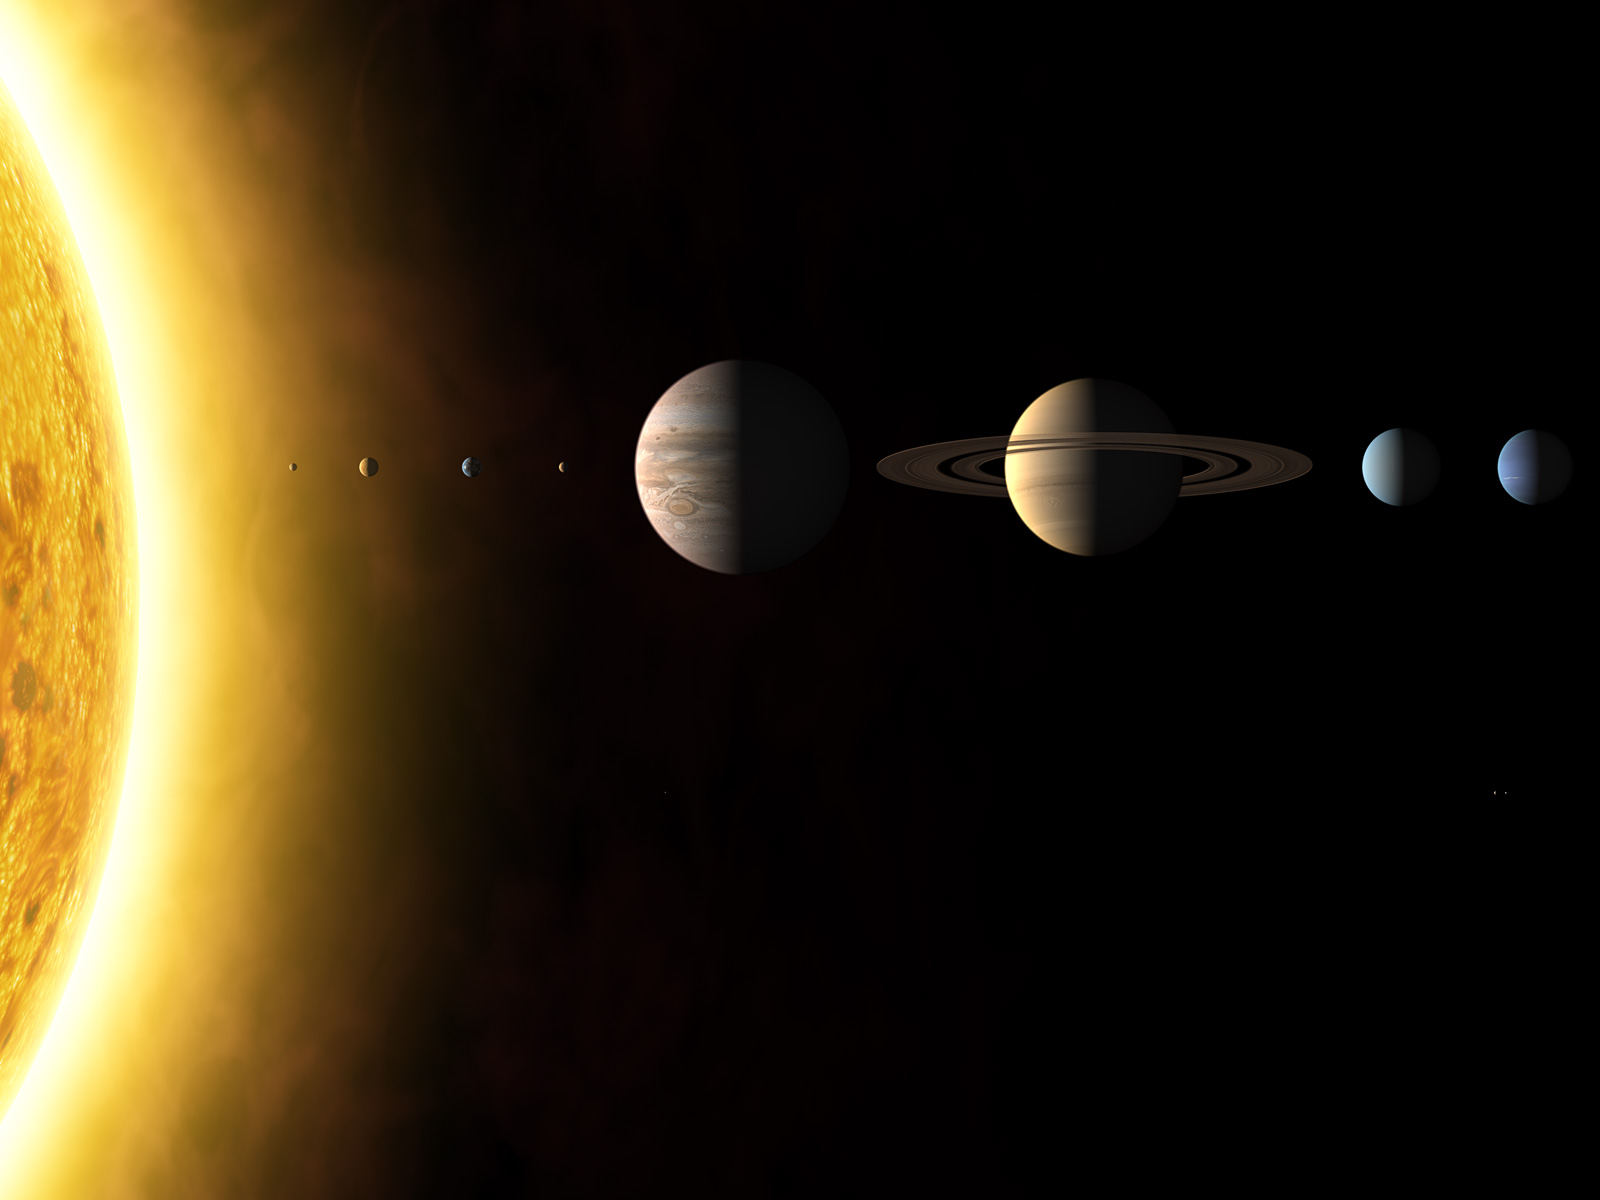 Hd Wallpapers Solar System Planets Moons 1575 X 1200 172 Kb Jpeg HD 1600x1200